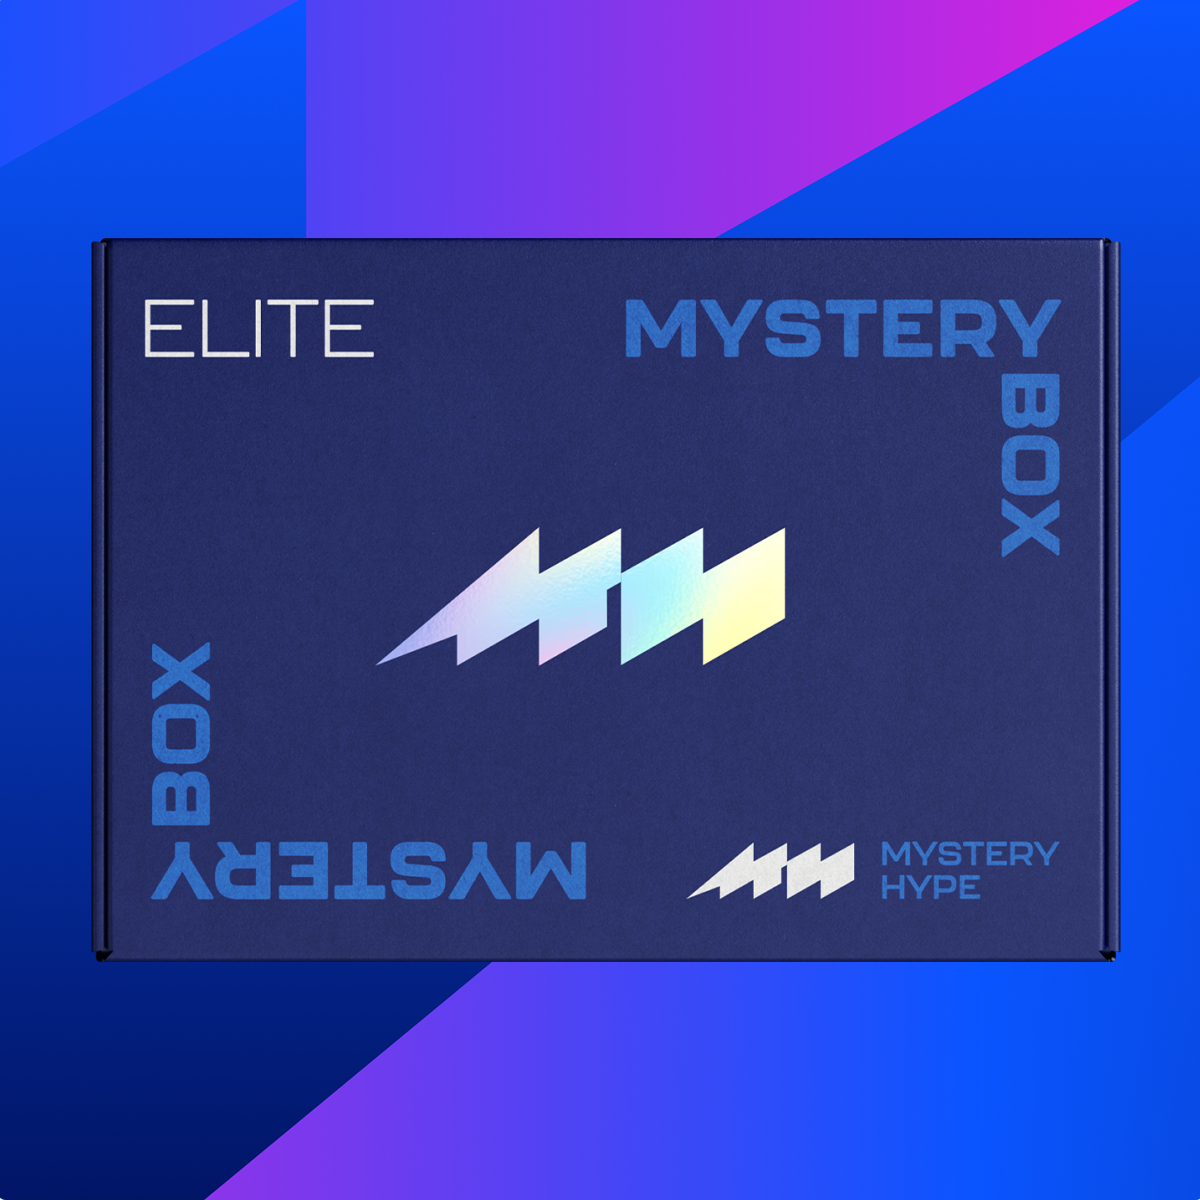 The Mystery Hype Elite Box